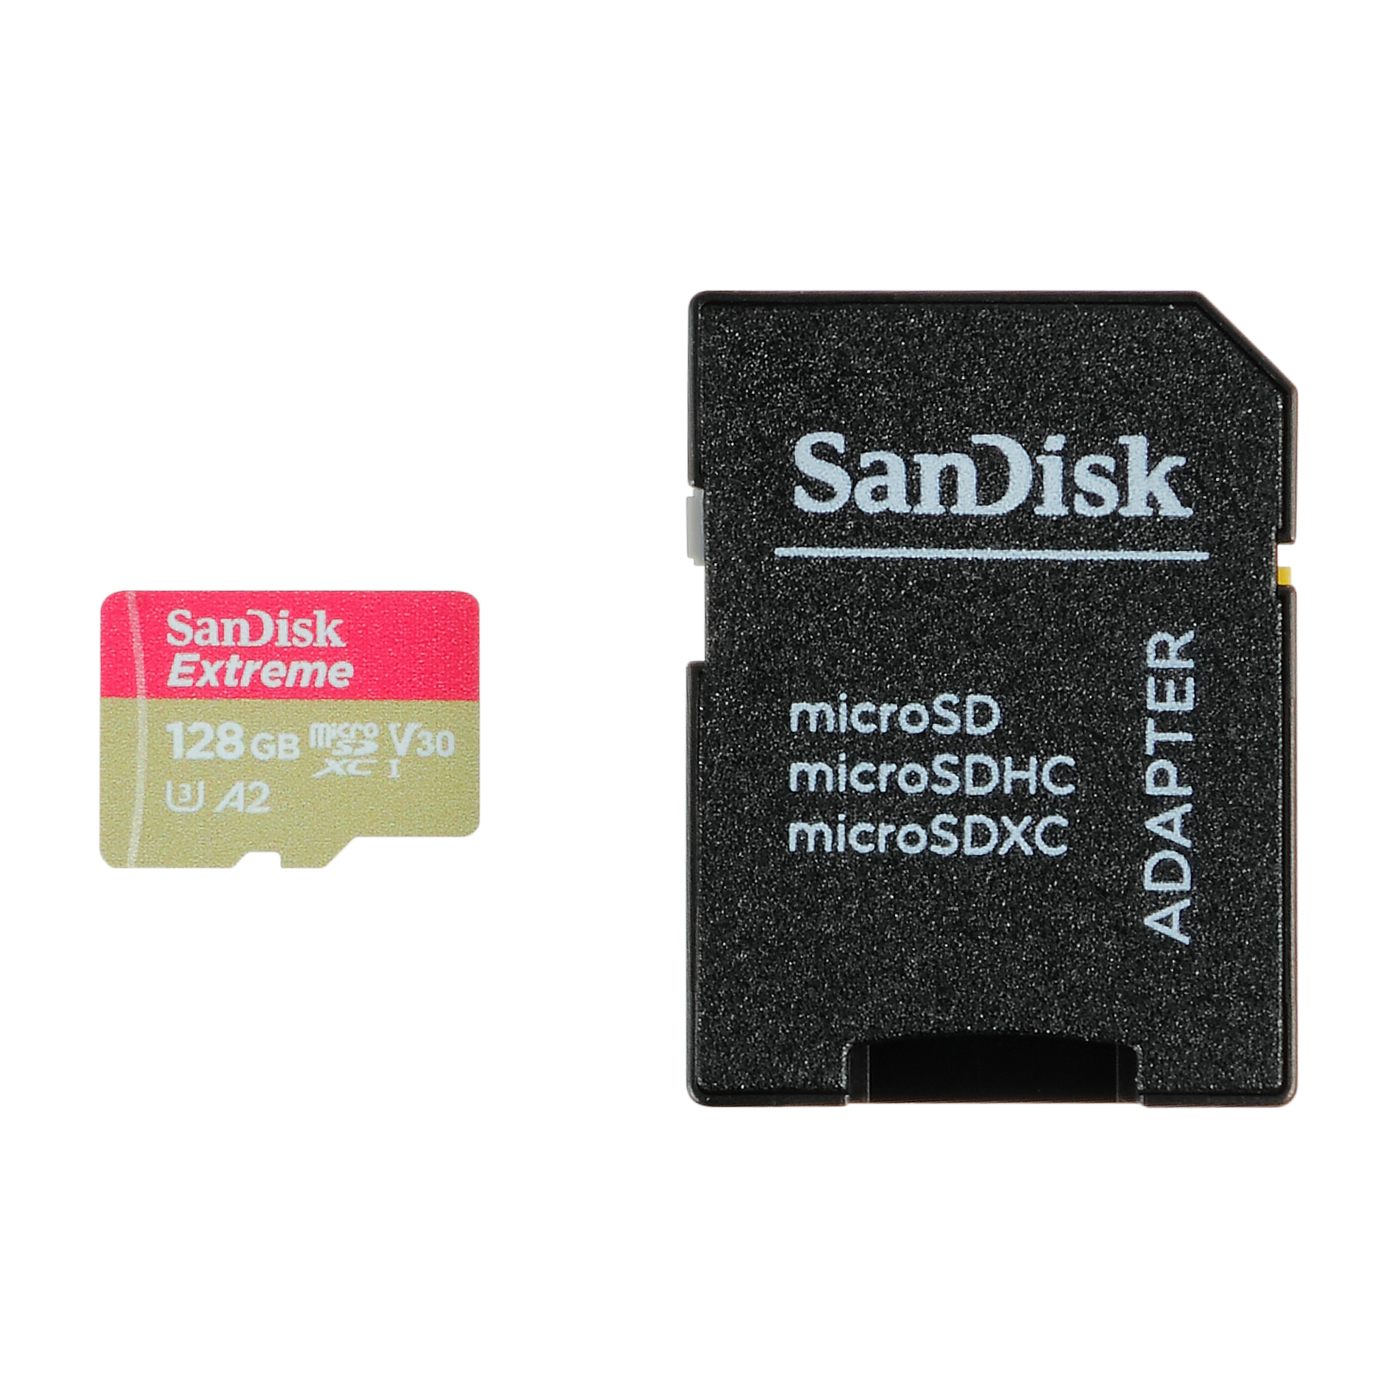 SanDisk マイクロSDカード microSDXC 64GB 高耐久 High Endurance ネコポス送料無料